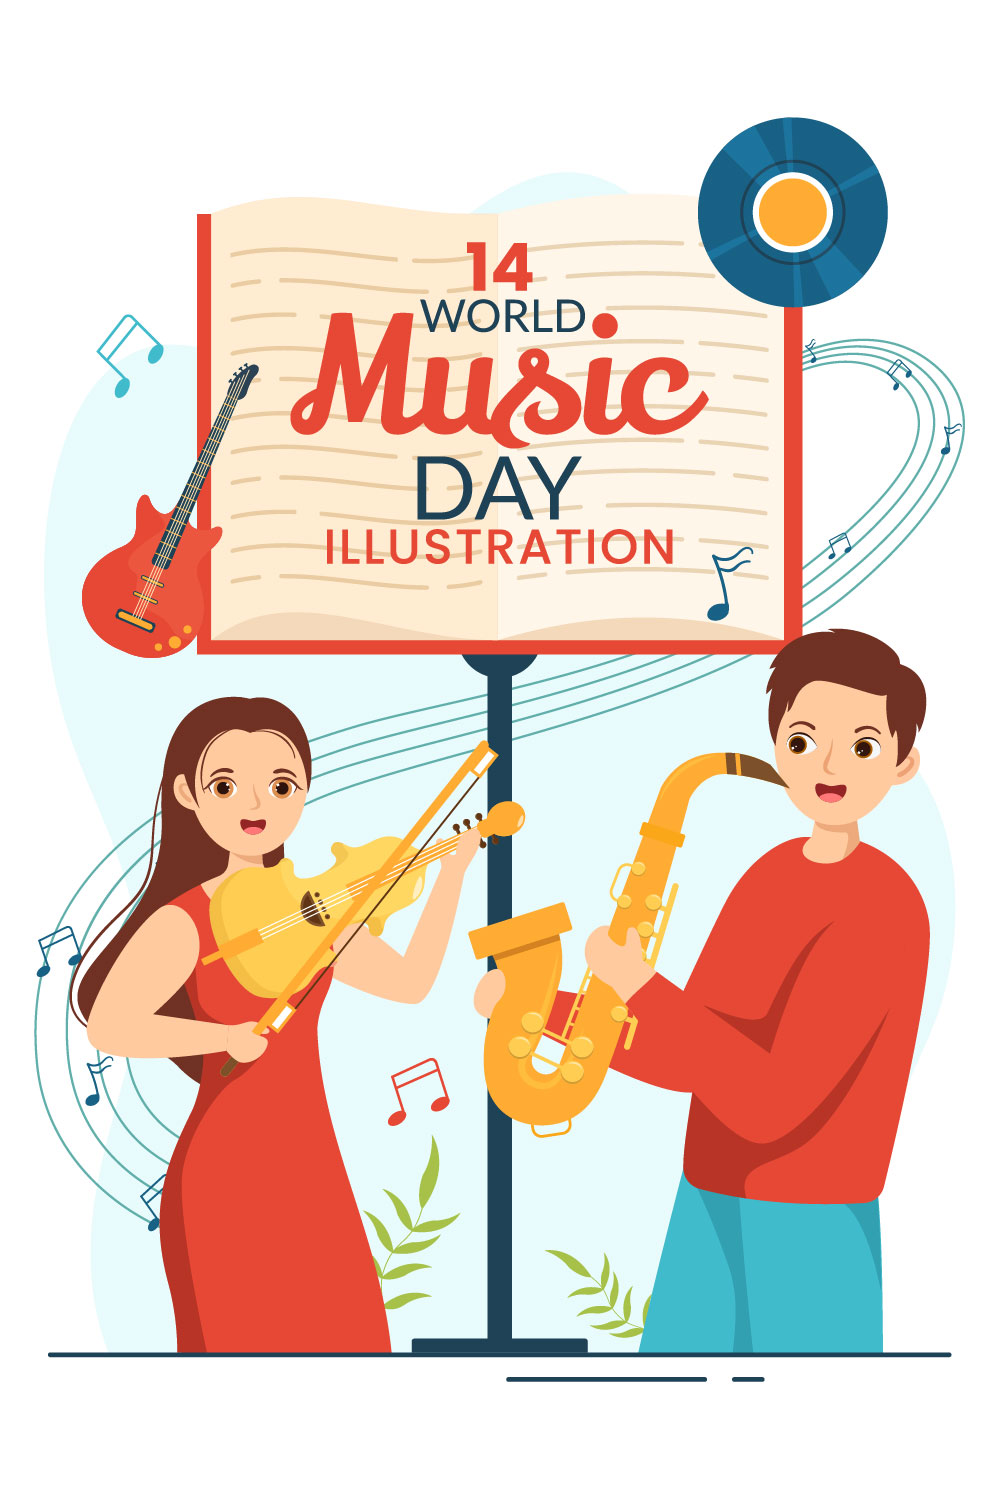 14 World Music Day Illustration pinterest preview image.